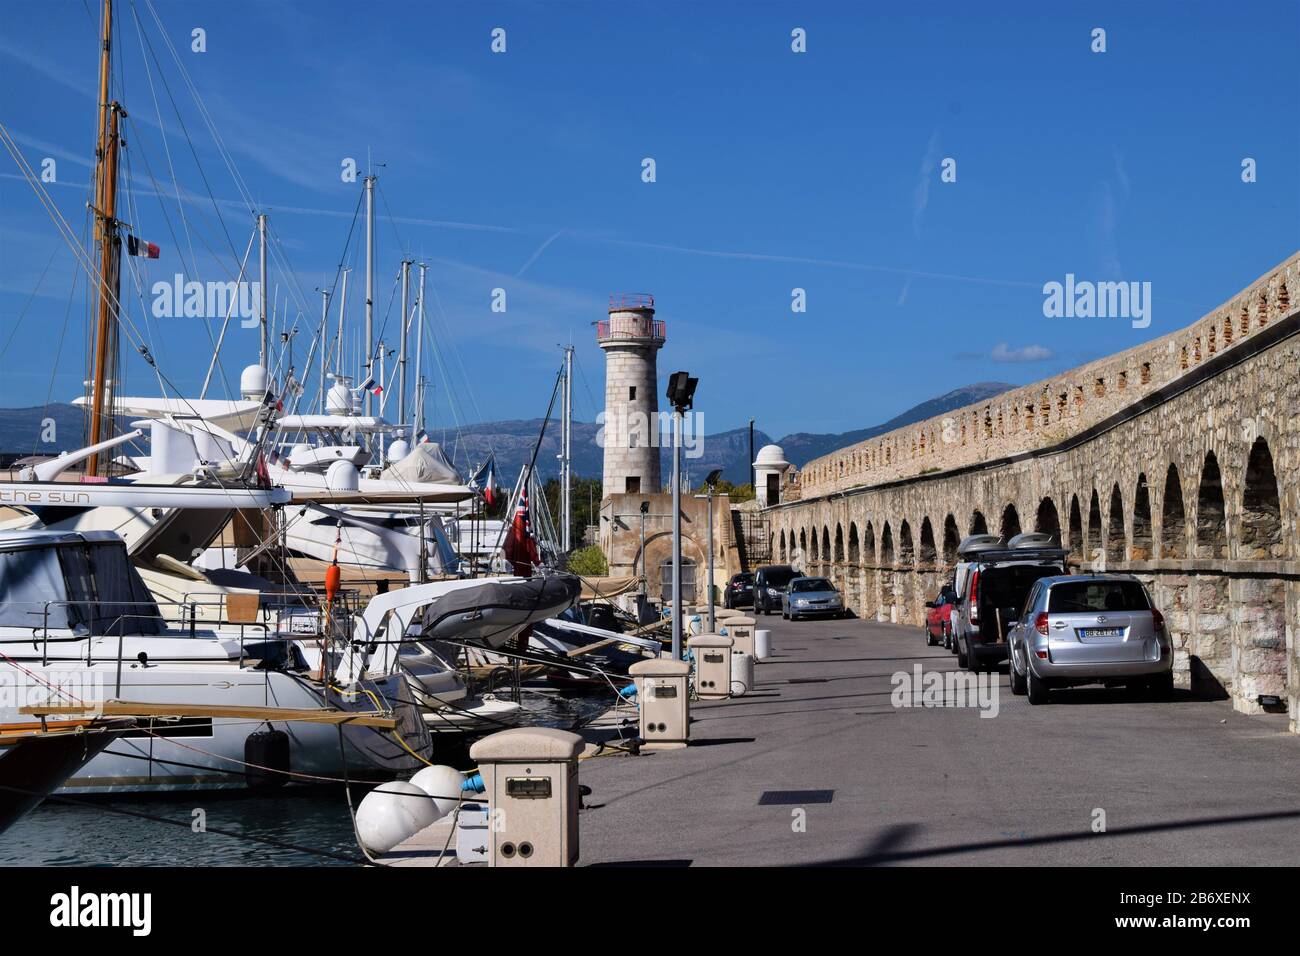 Port Vauban, Antibes, South of France Stock Photo